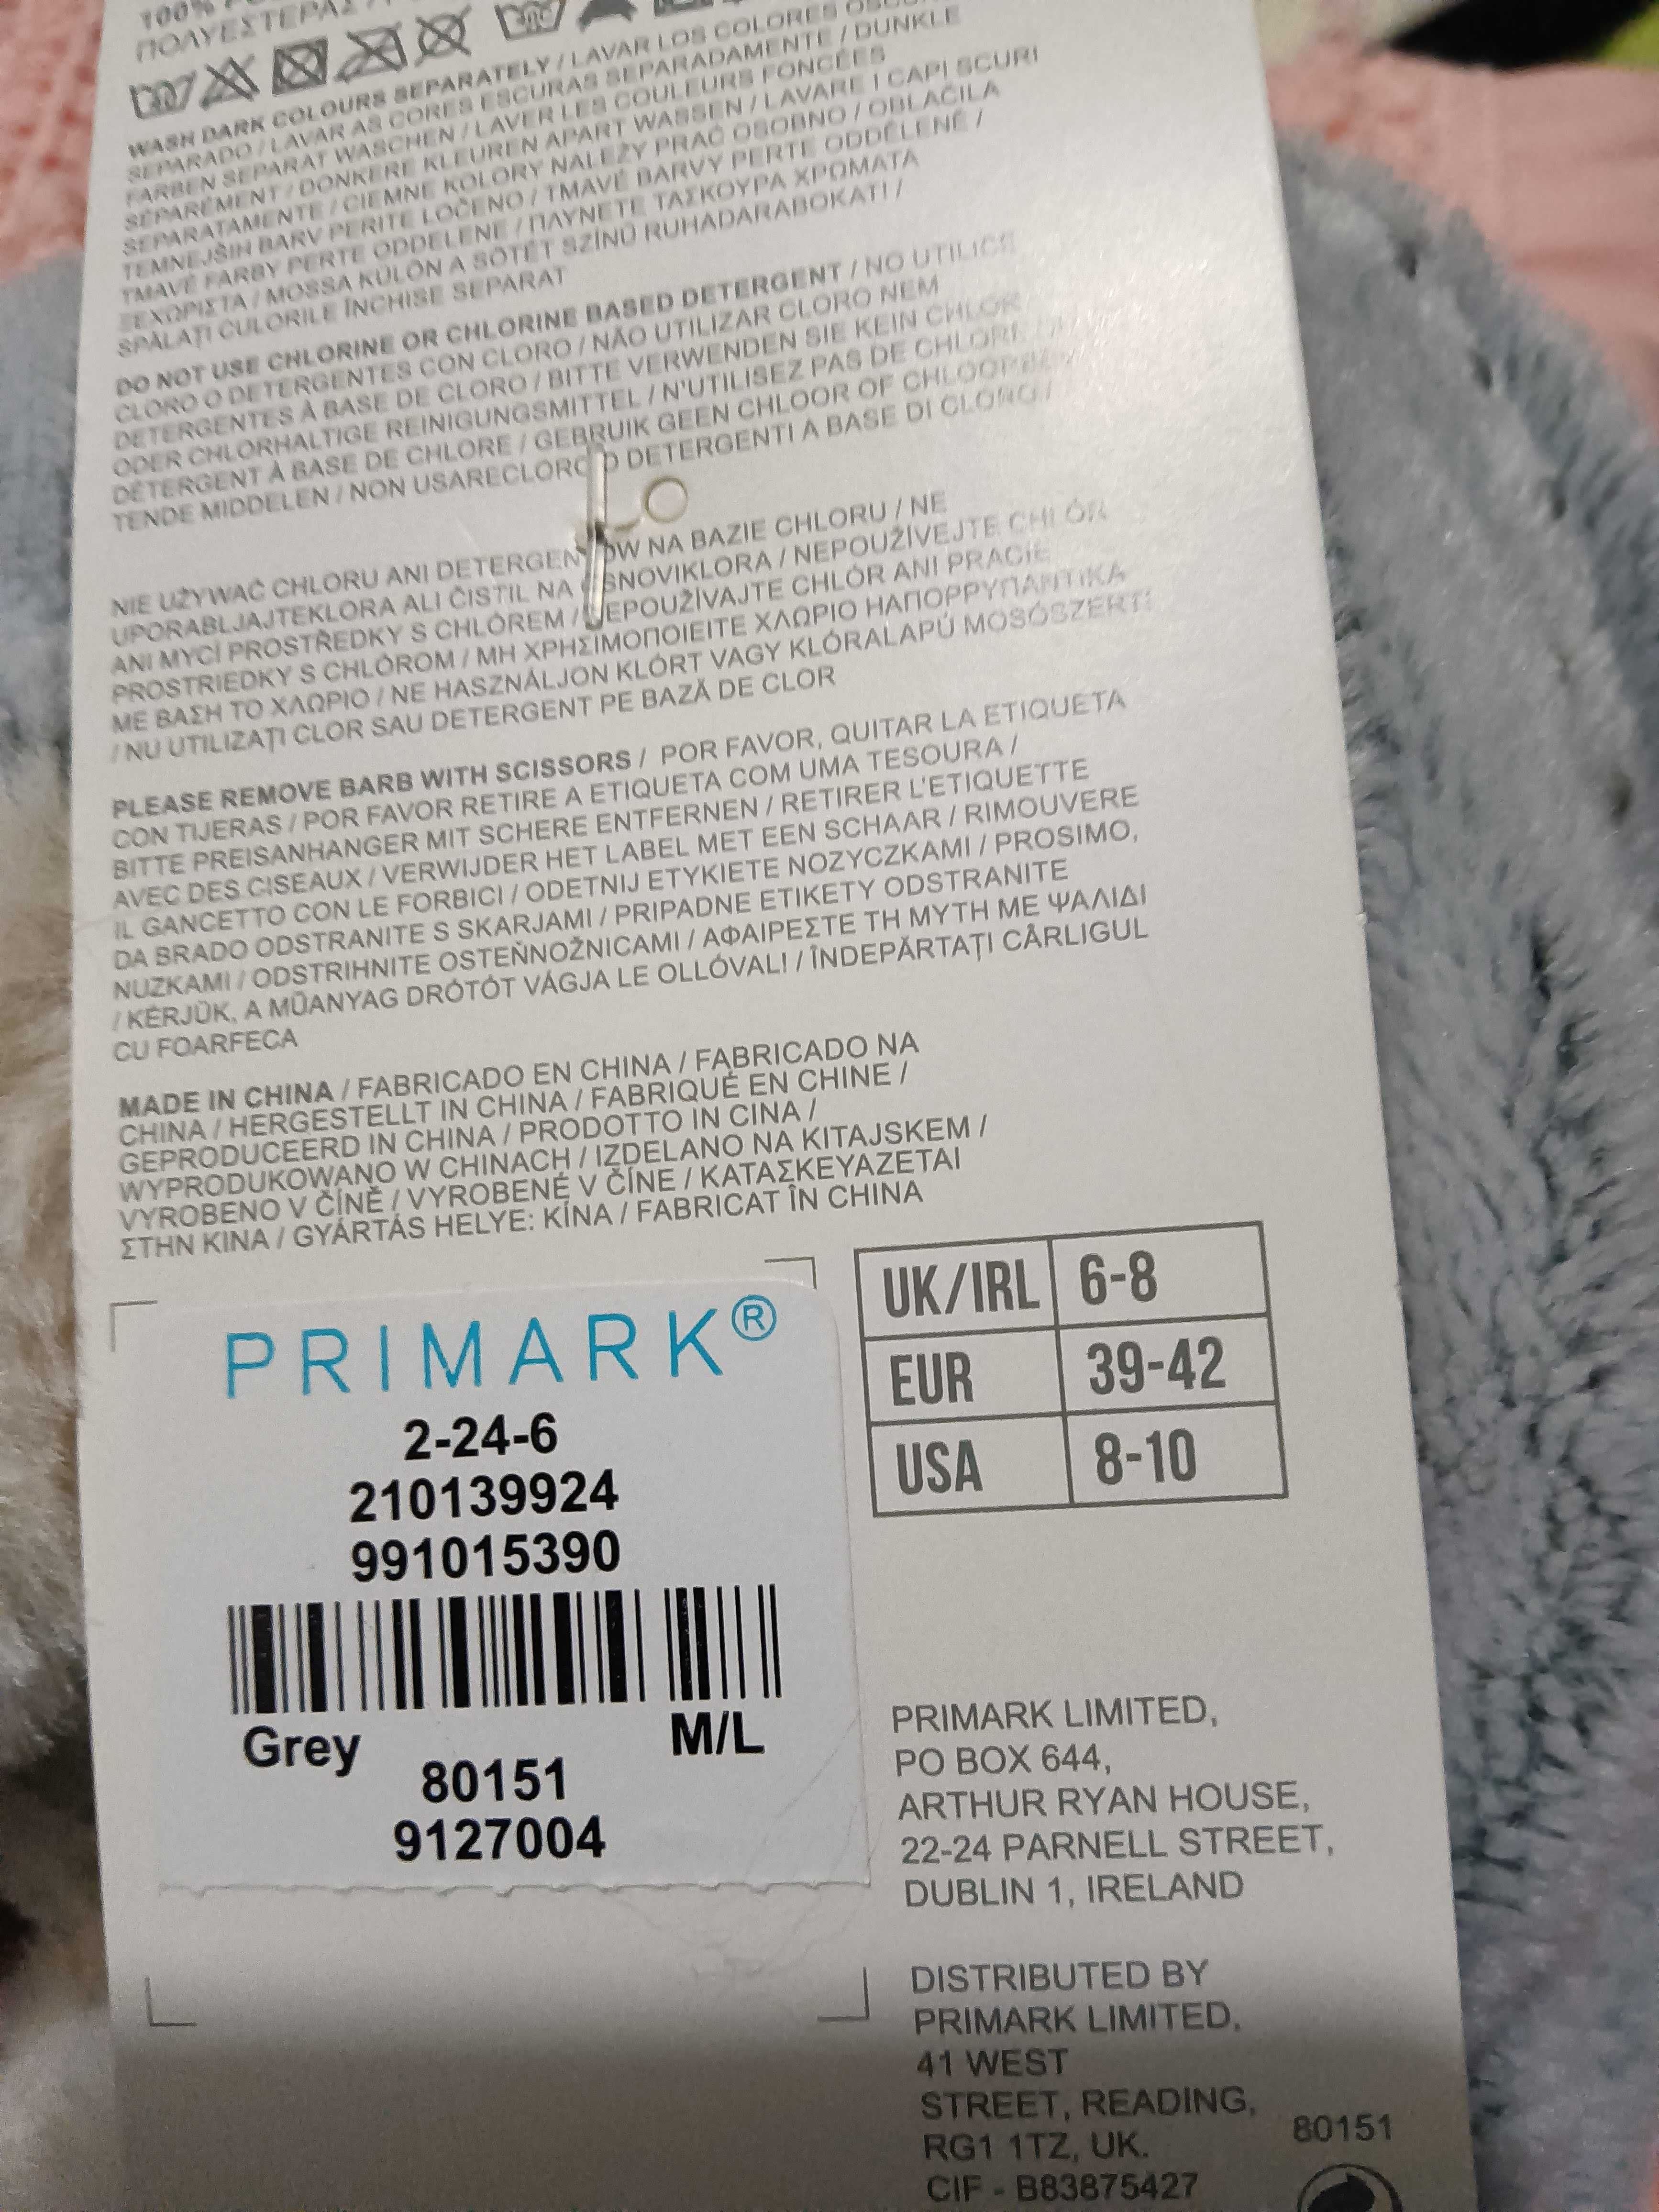 Pantufas cinza de Senhora da marca Primark (M/L)